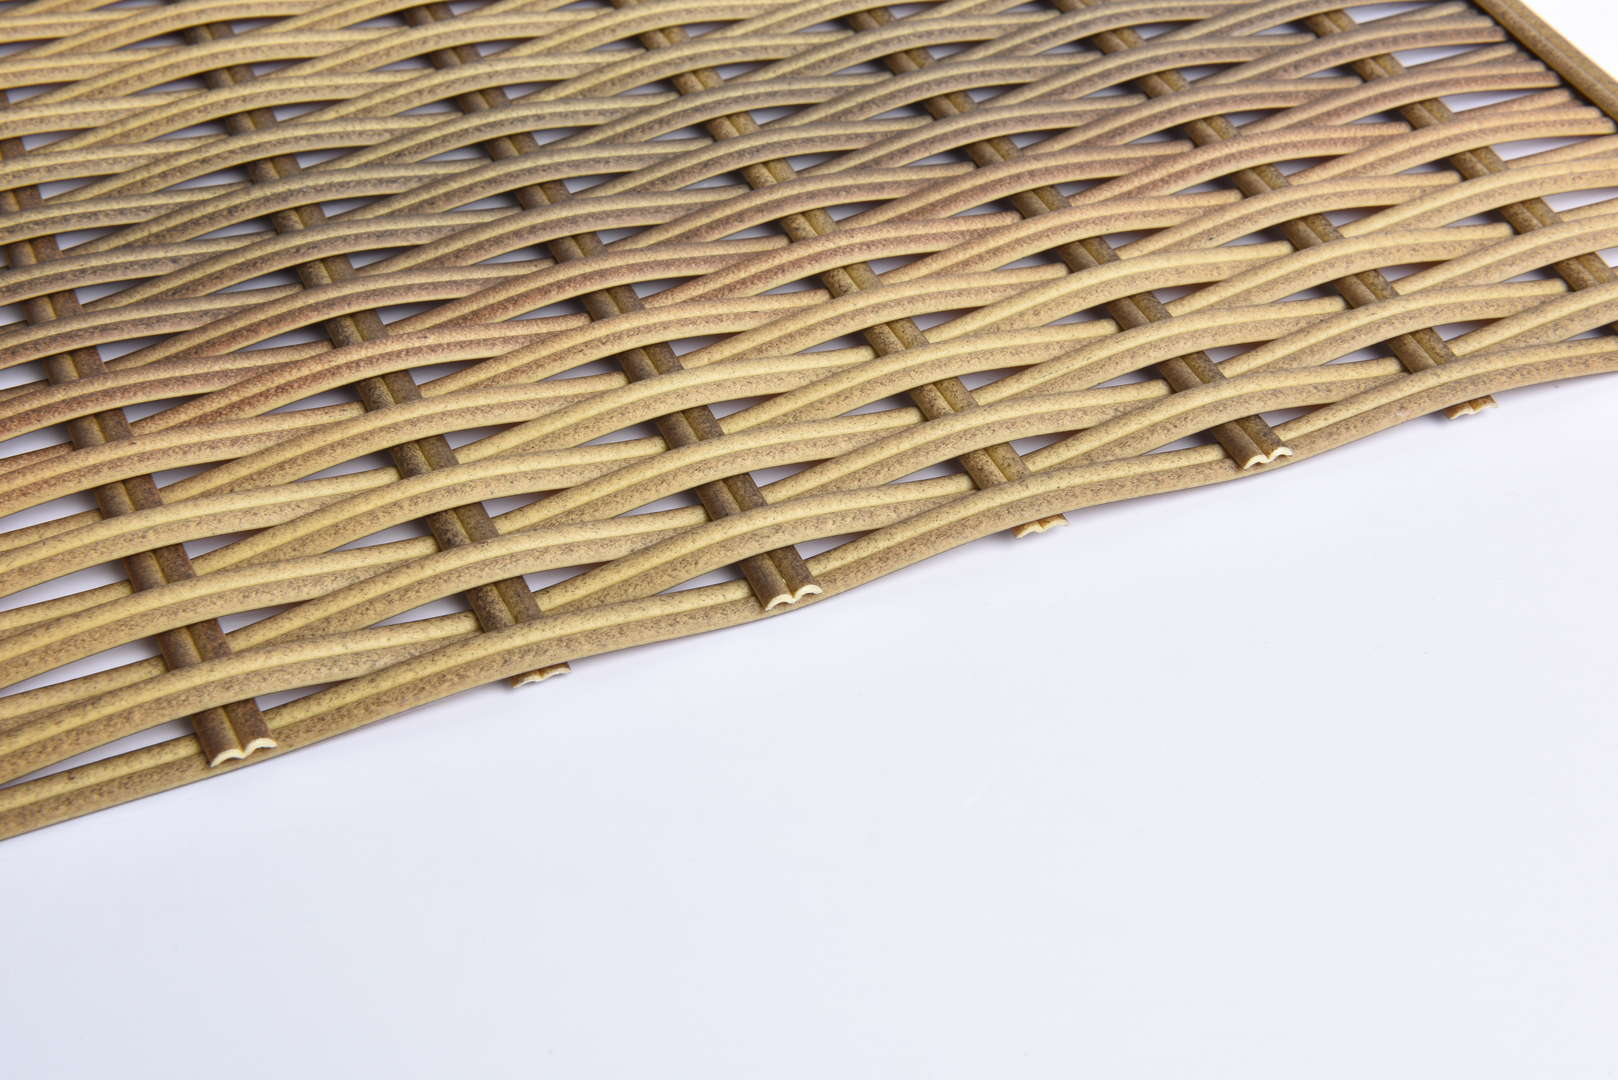 Resin Wicker Material For Weaving Outdoor Furniture-BM-32655